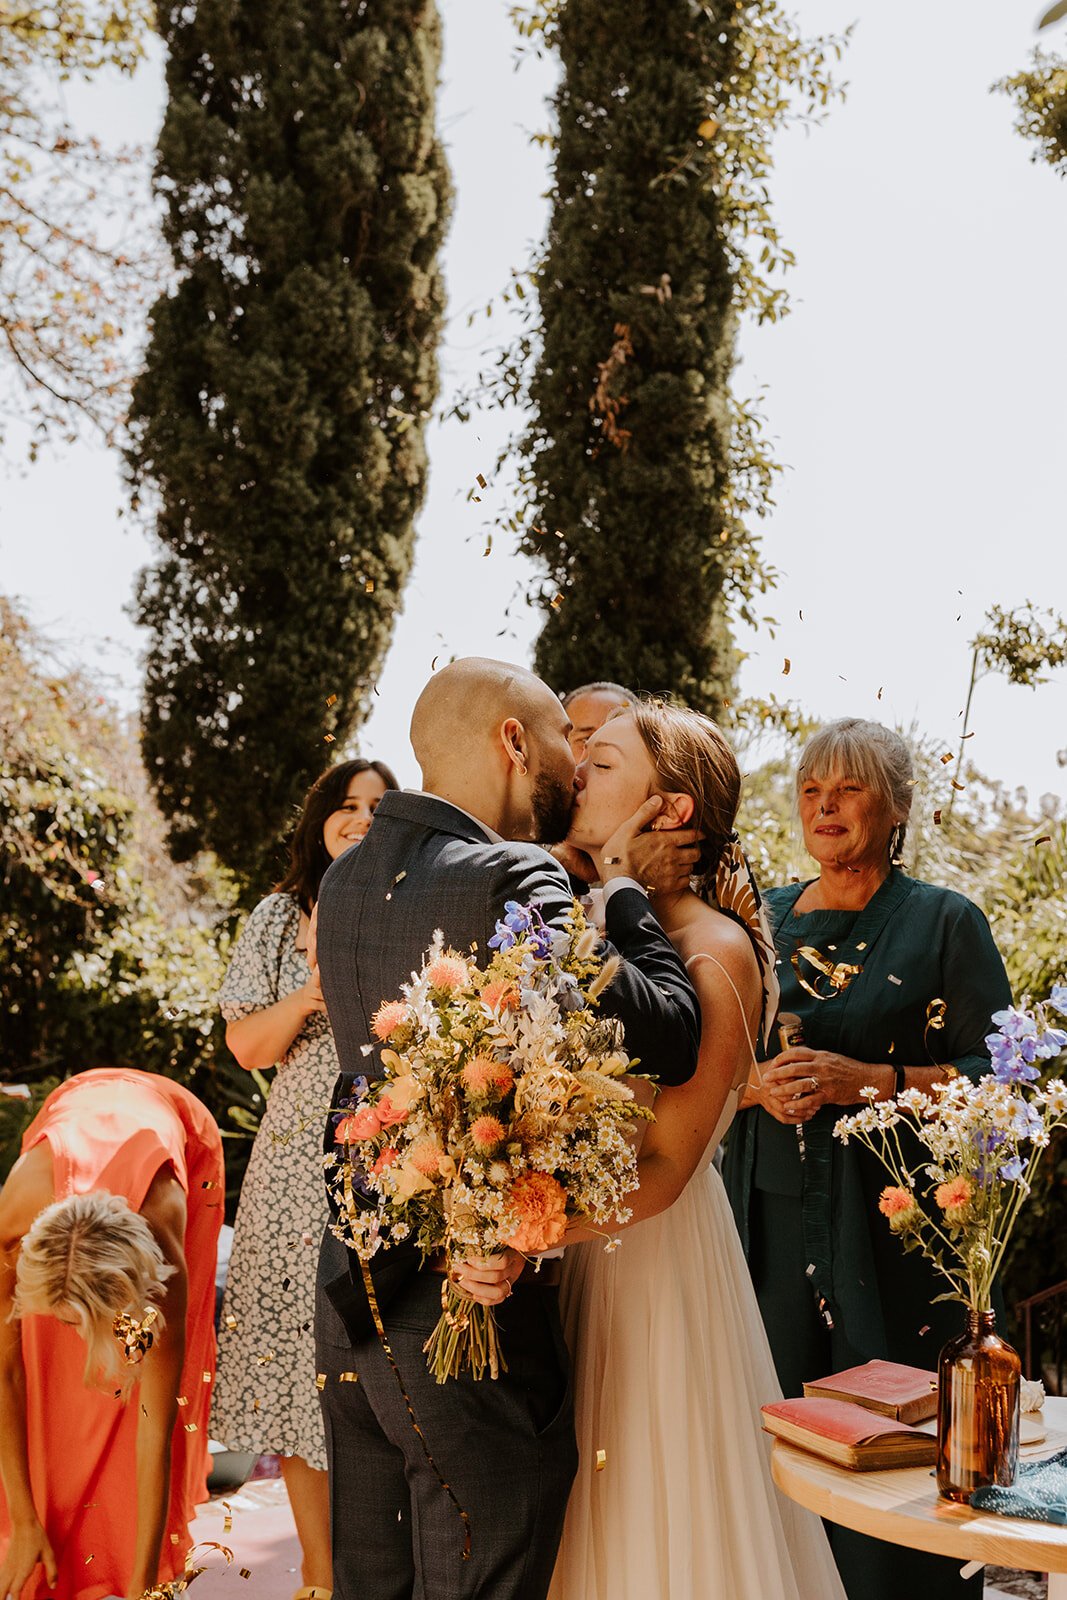 Romantic first kiss, Los Angeles airbnb wedding, zoom wedding, virtual wedding, covid wedding, Los Angeles elopement, Los Angeles Wedding Photographer, Photo by Tida Svy | www.tidasvy.com